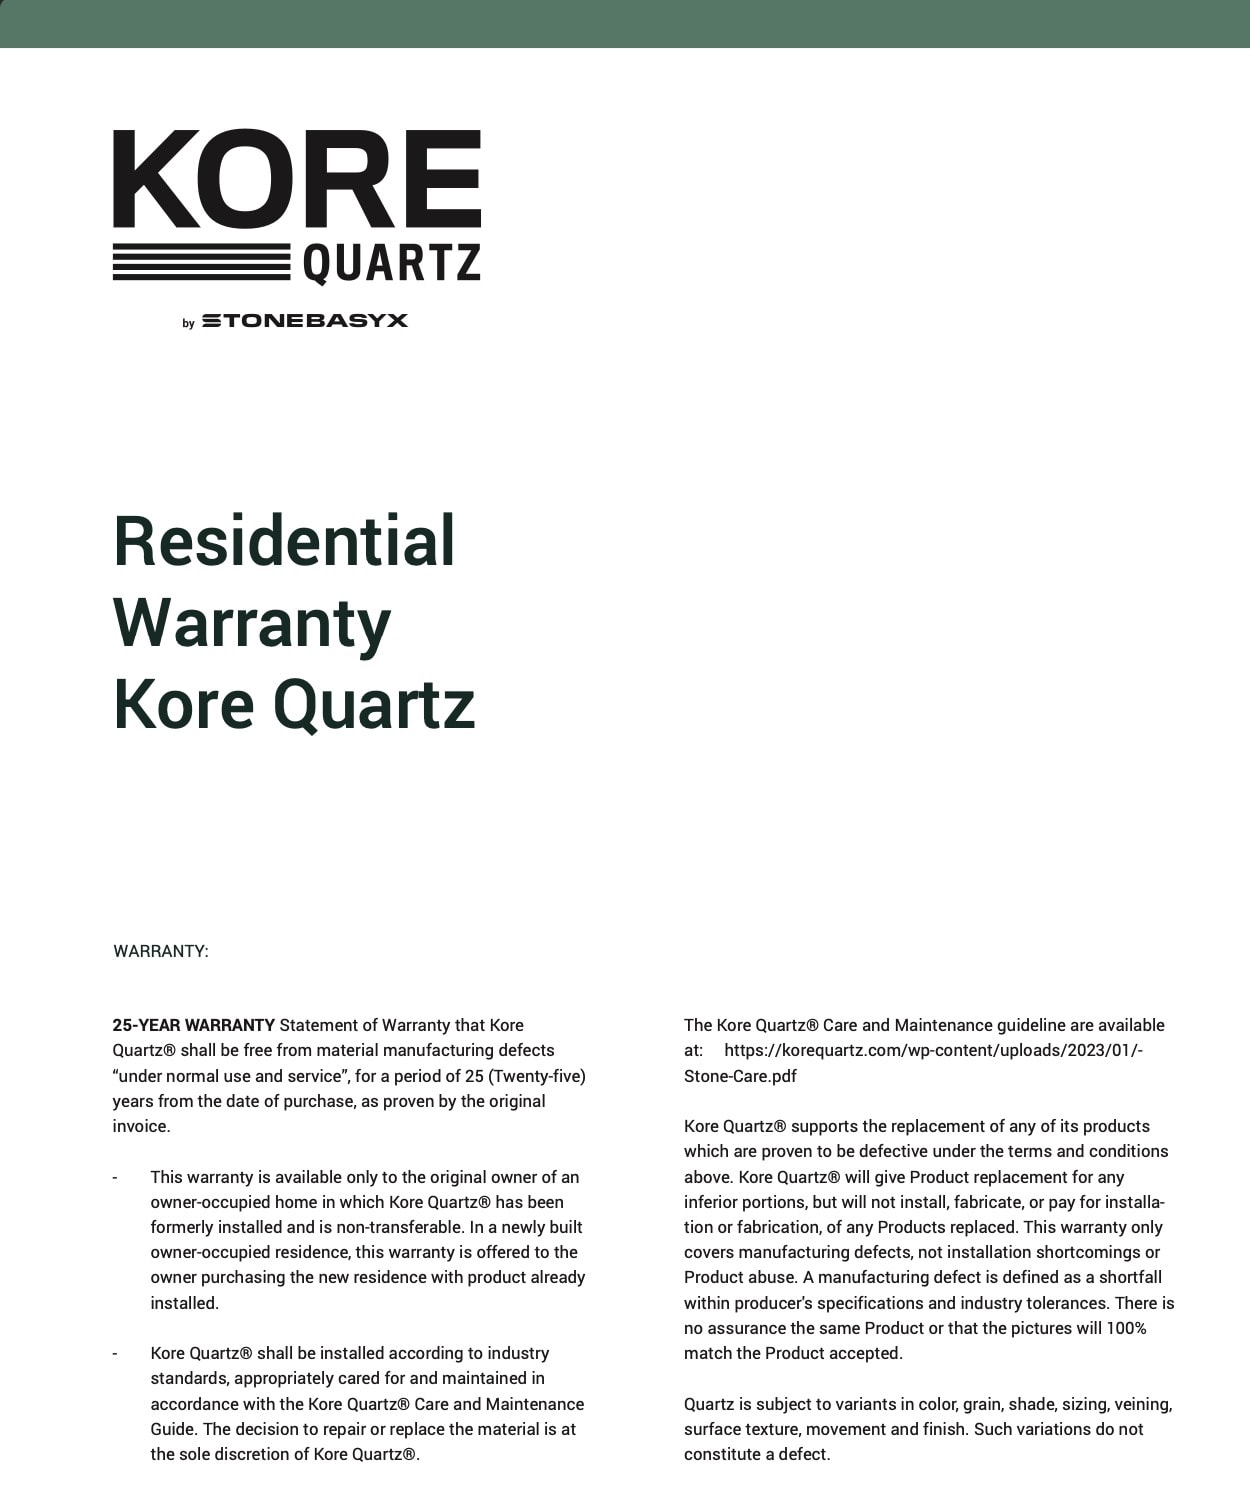 Kore Quartz residential warranty